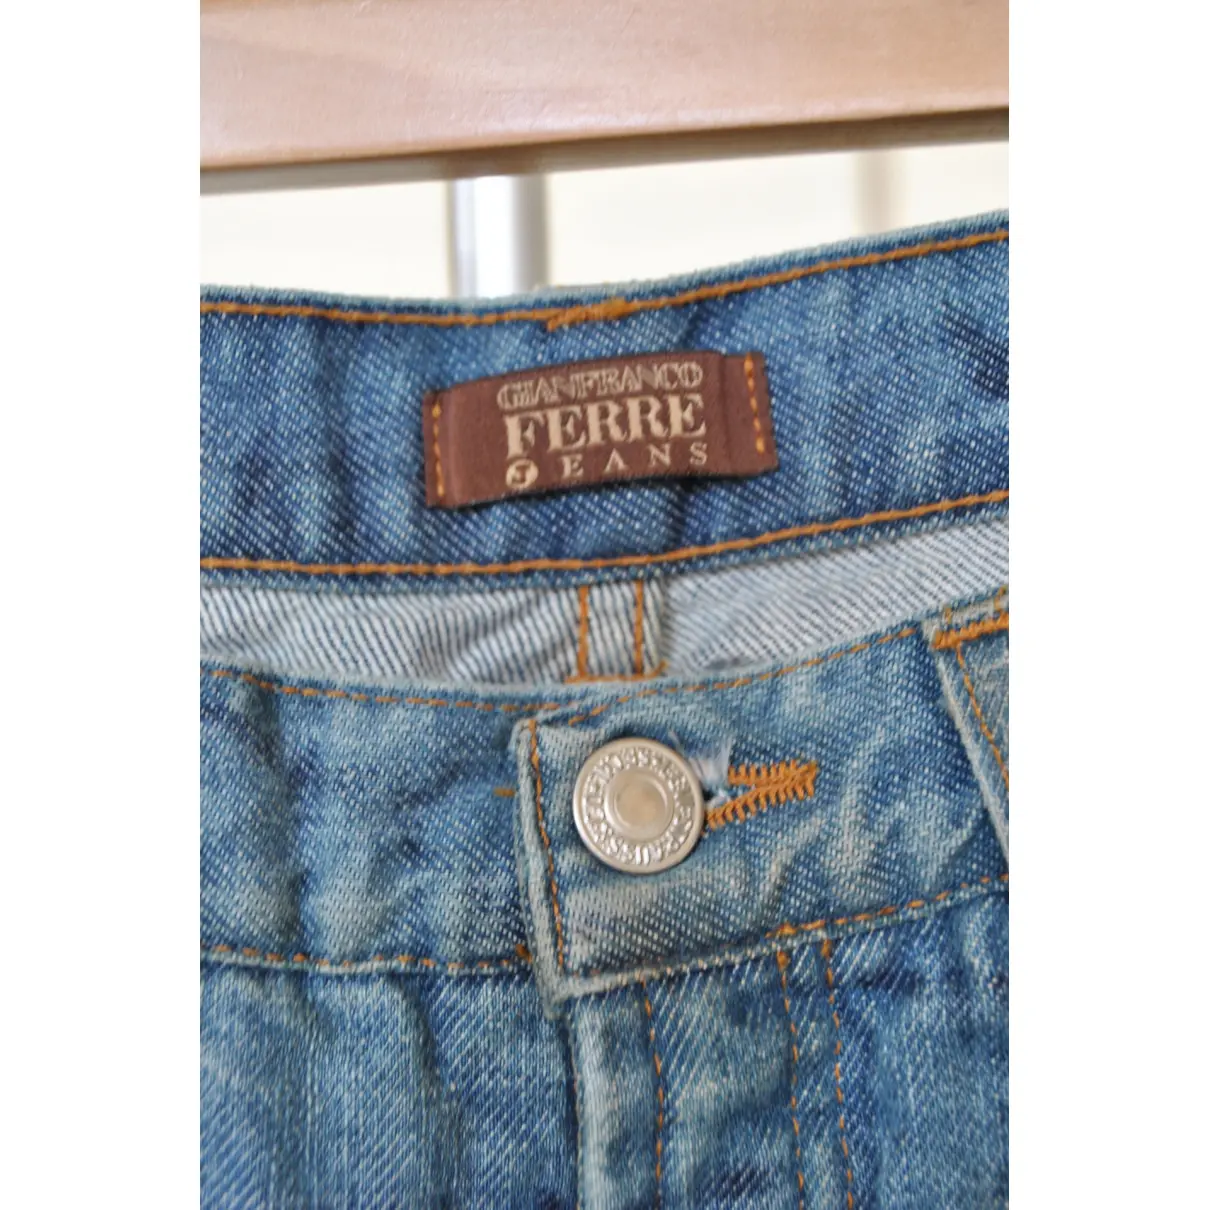 Buy Gianfranco Ferré Bootcut jeans online